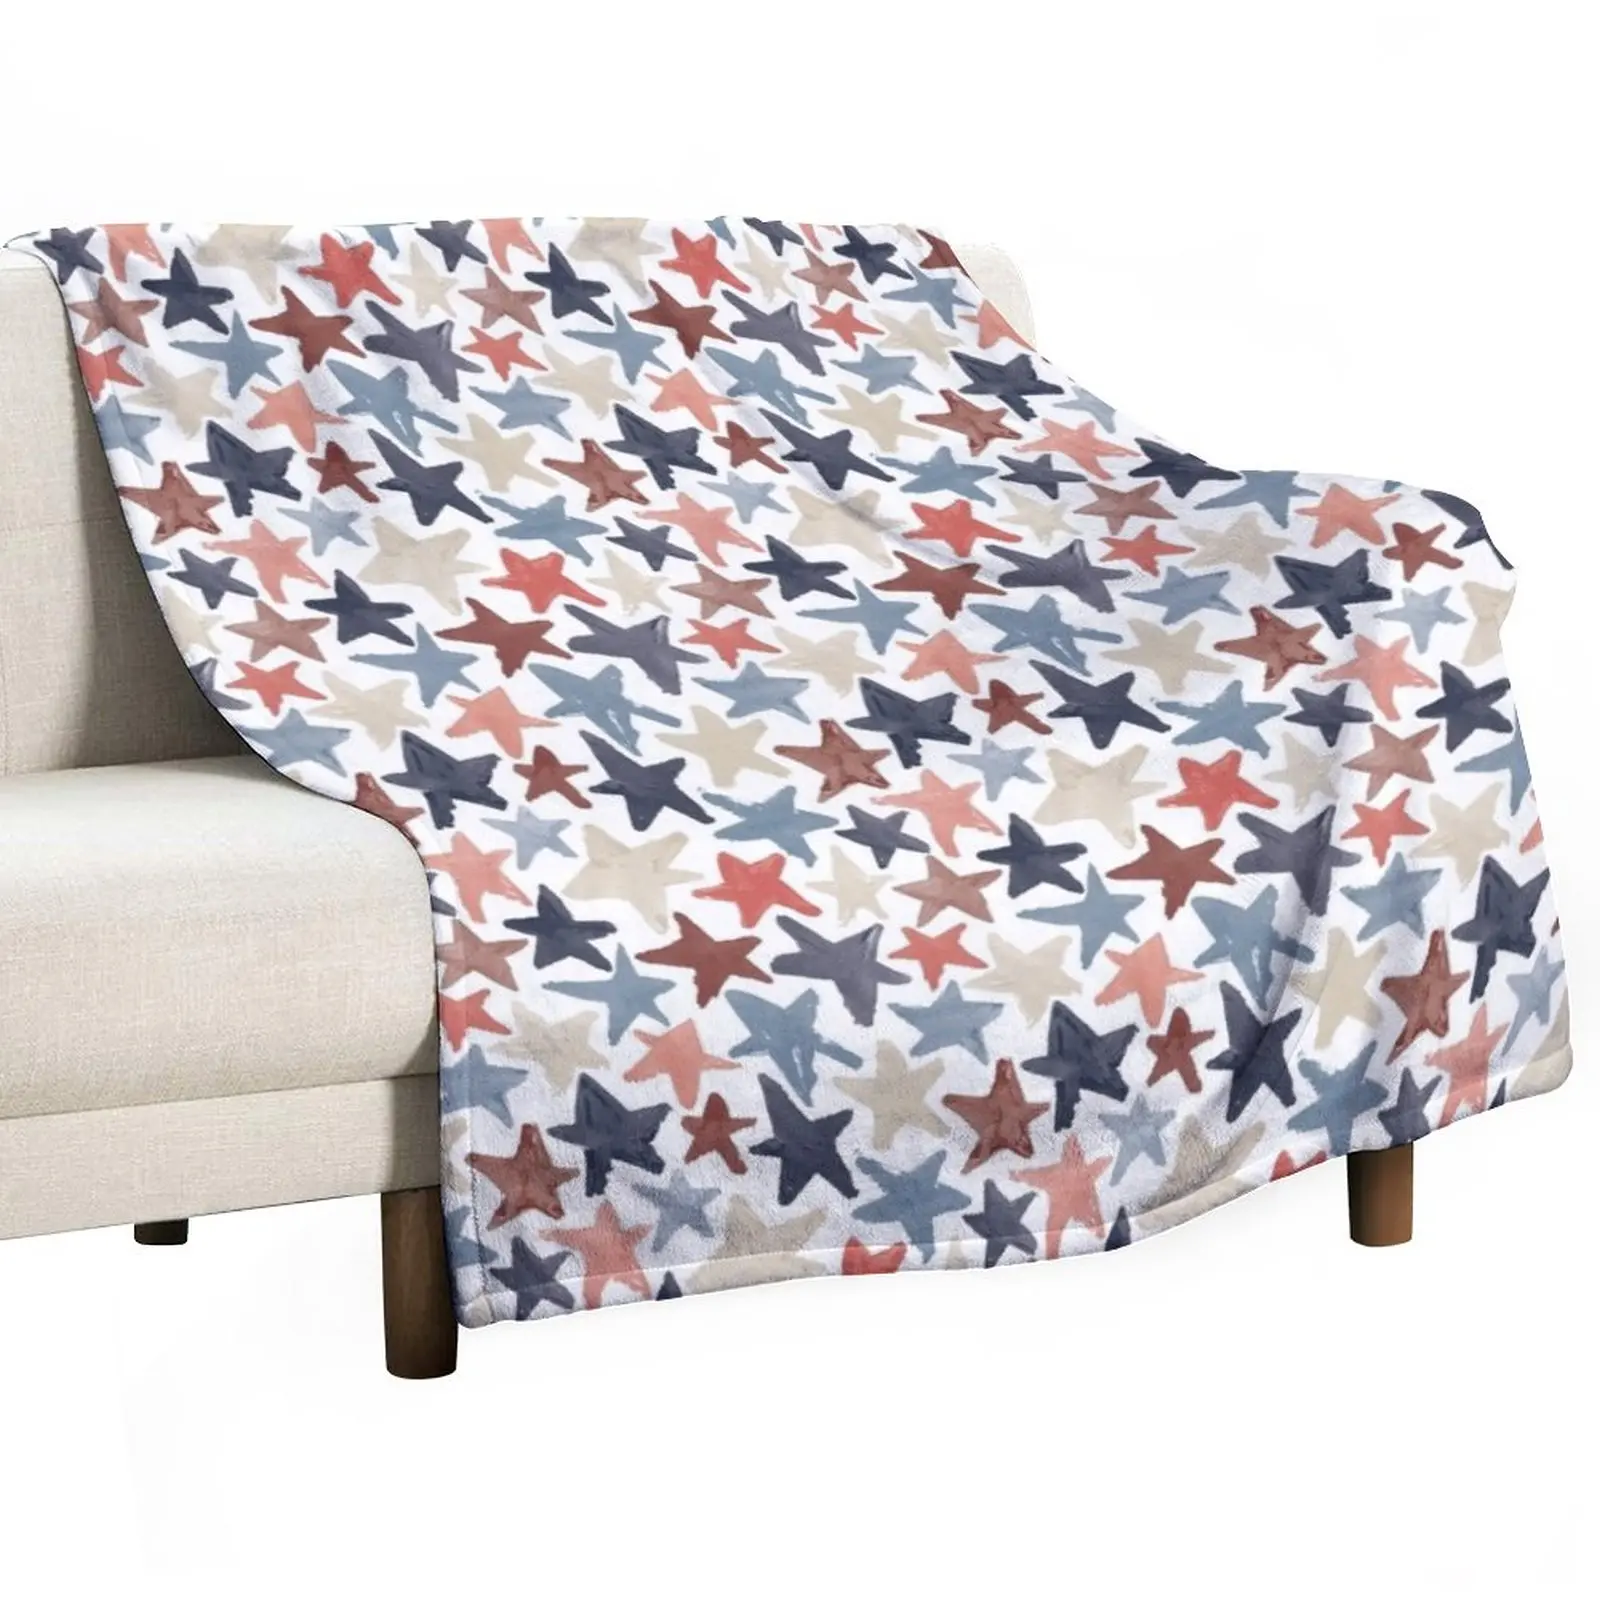 

Patriot Throw Blanket wednesday Shaggy Blanket Decorative Bed Blankets Summer Bedding Blankets